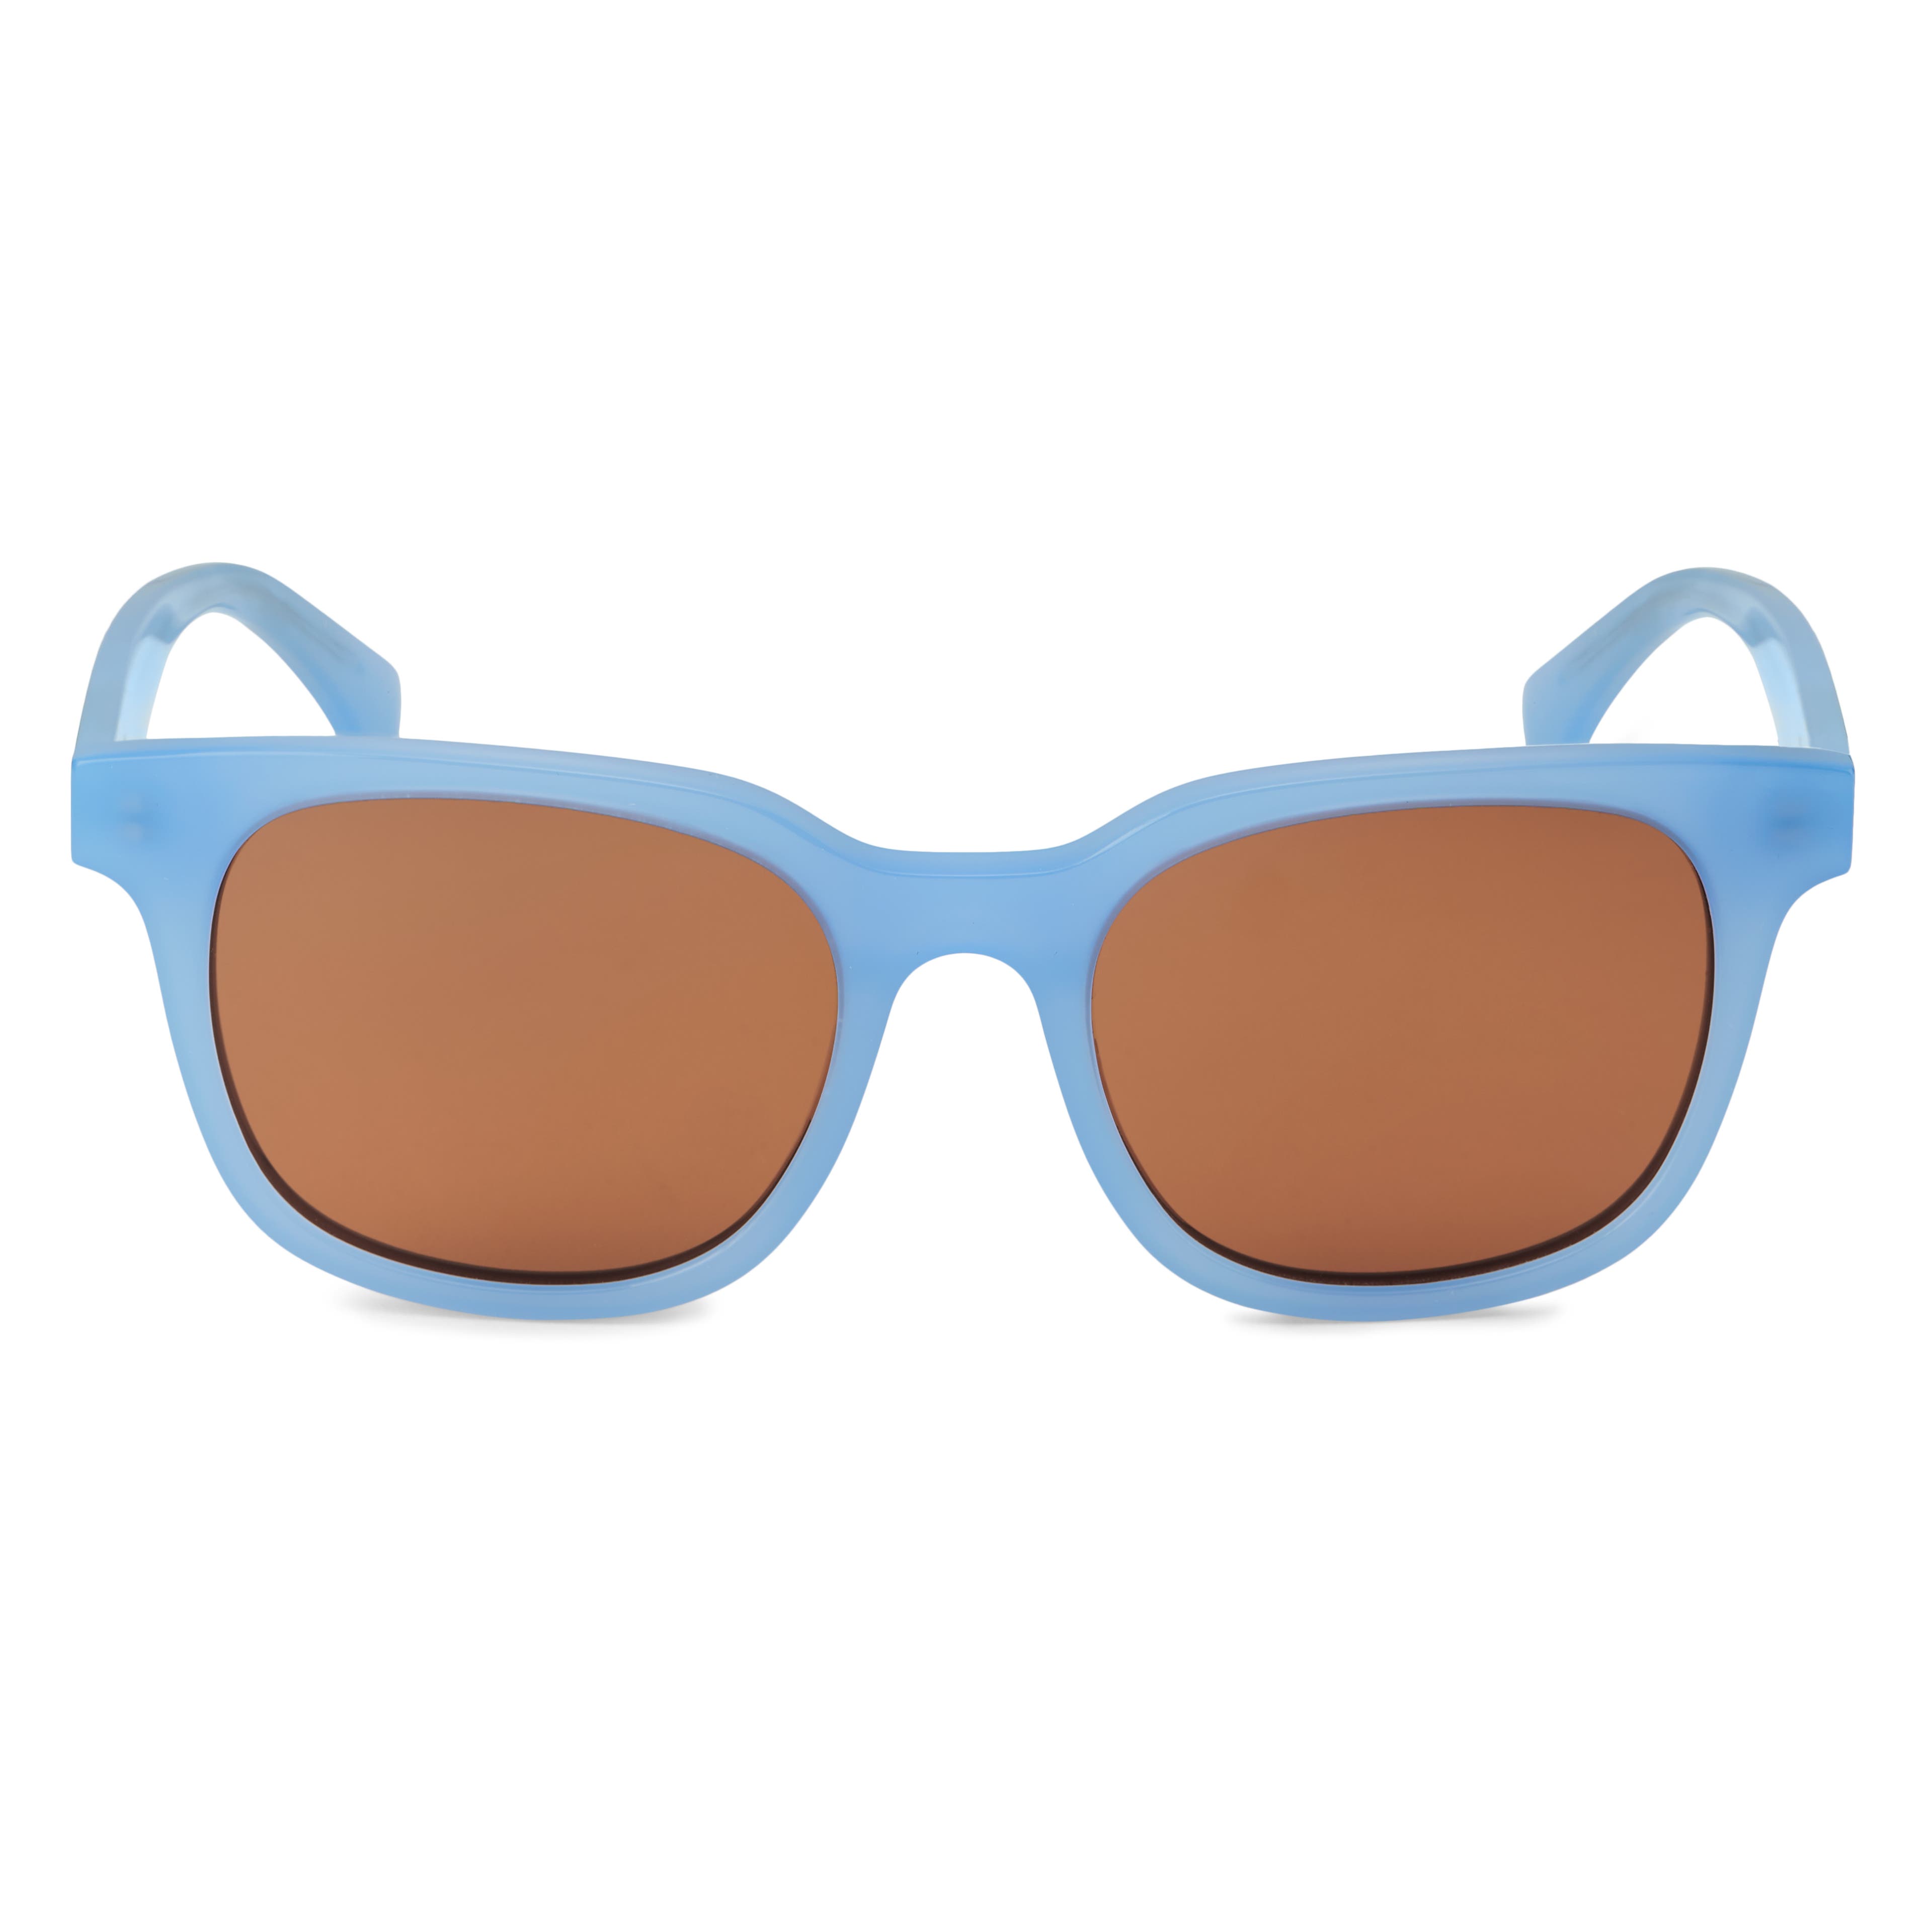 Thea | Light Blue & Terracotta Polarised Sunglasses